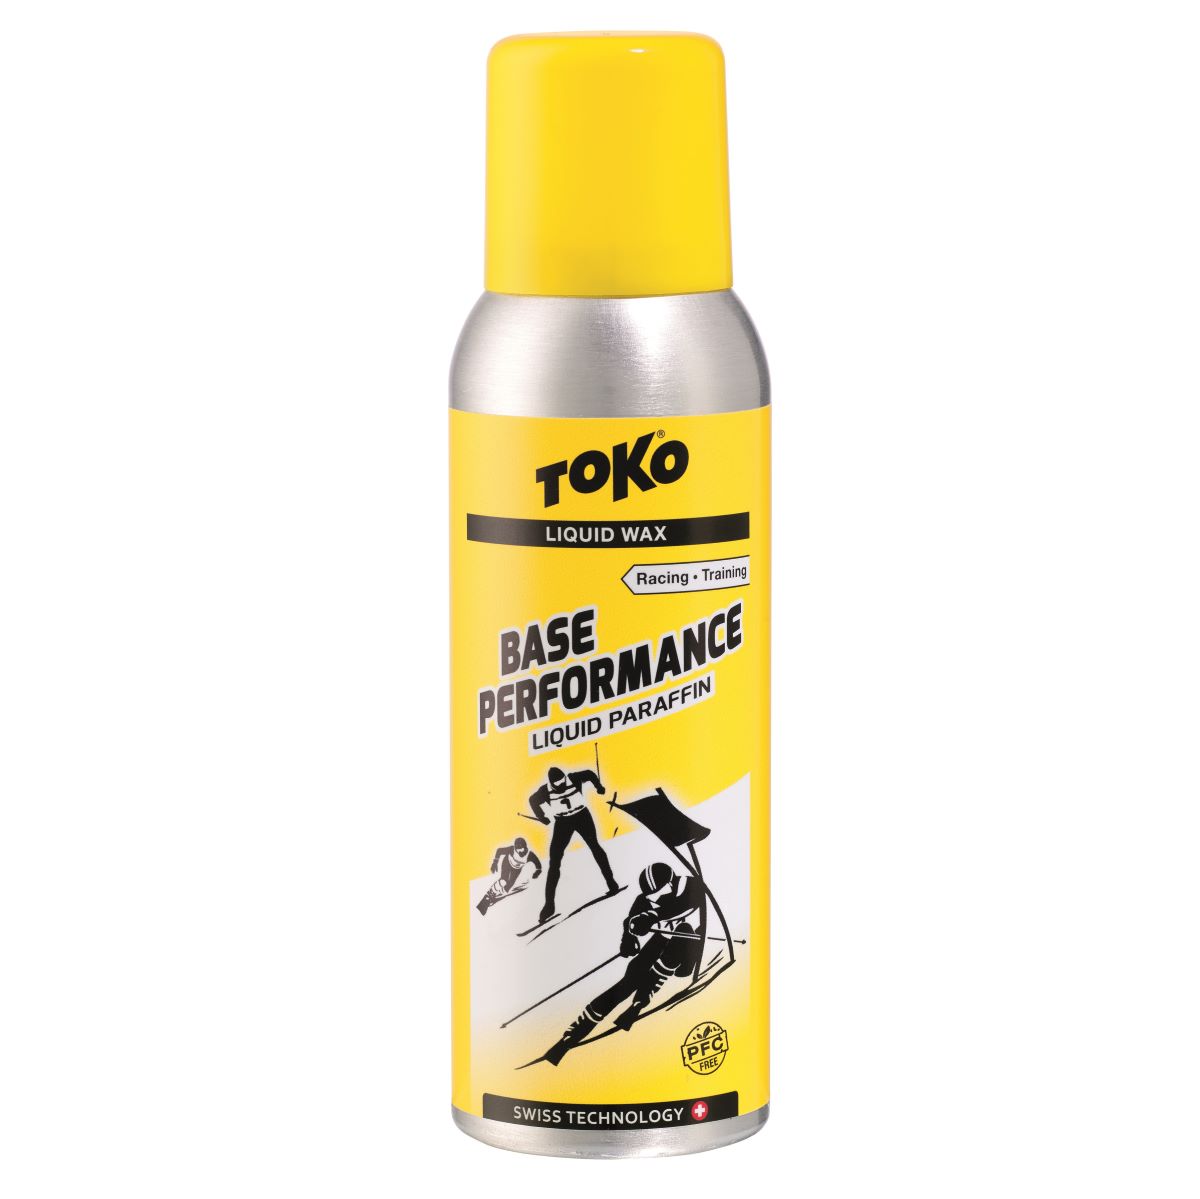 Toko Base Performance Liquid paraffin yellow